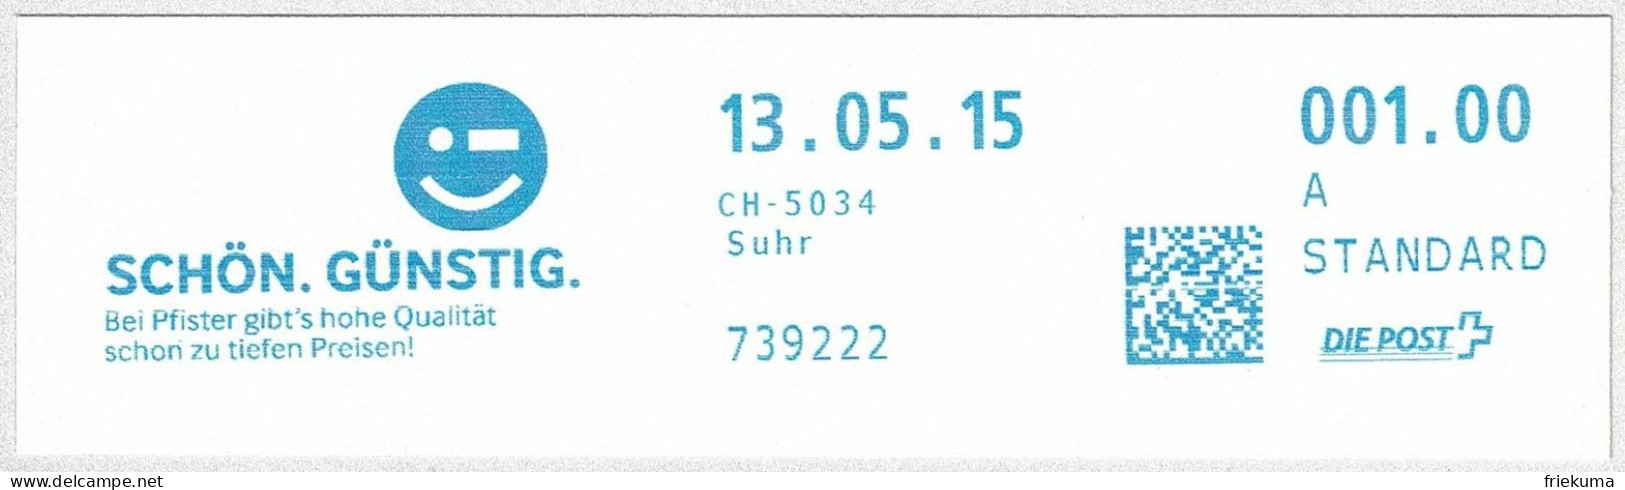 Schweiz / Helvetia 2015, Freistempel / EMA / Meterstamp Möbel Pfister Suhr, Emoji - Frankeermachinen